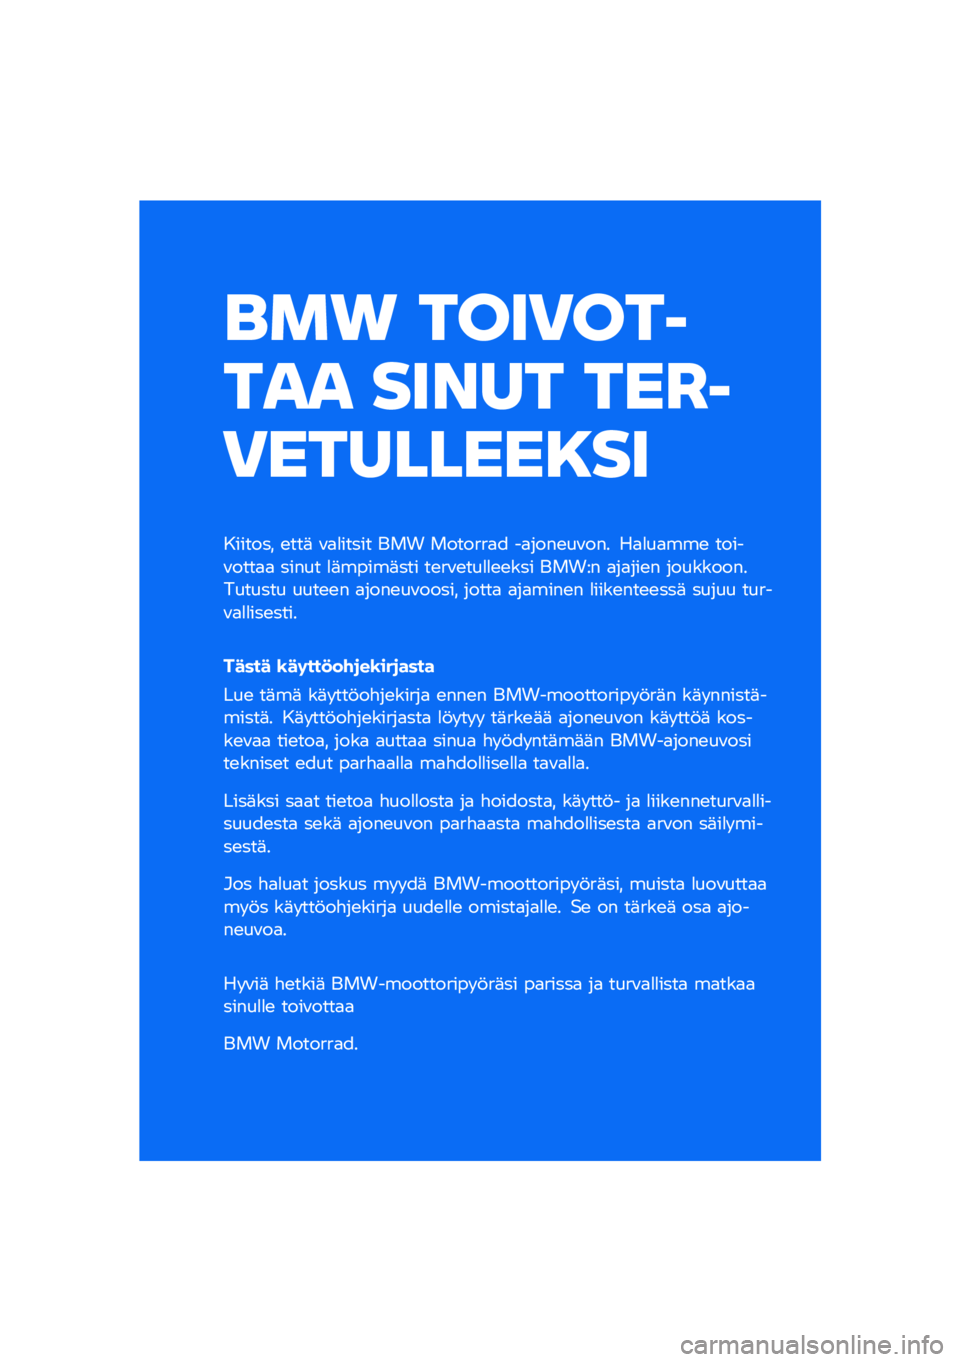 BMW MOTORRAD K 1600 B 2020  Käsikirja (in Finnish) ��� ����\b���	
��
�
 ���\f�
� ����	
�\b���
�������
������� �\b���	 �\f�
�
����� ��� �������
� ��
����\b��\f��� ��
�
��
���\b �����\f��